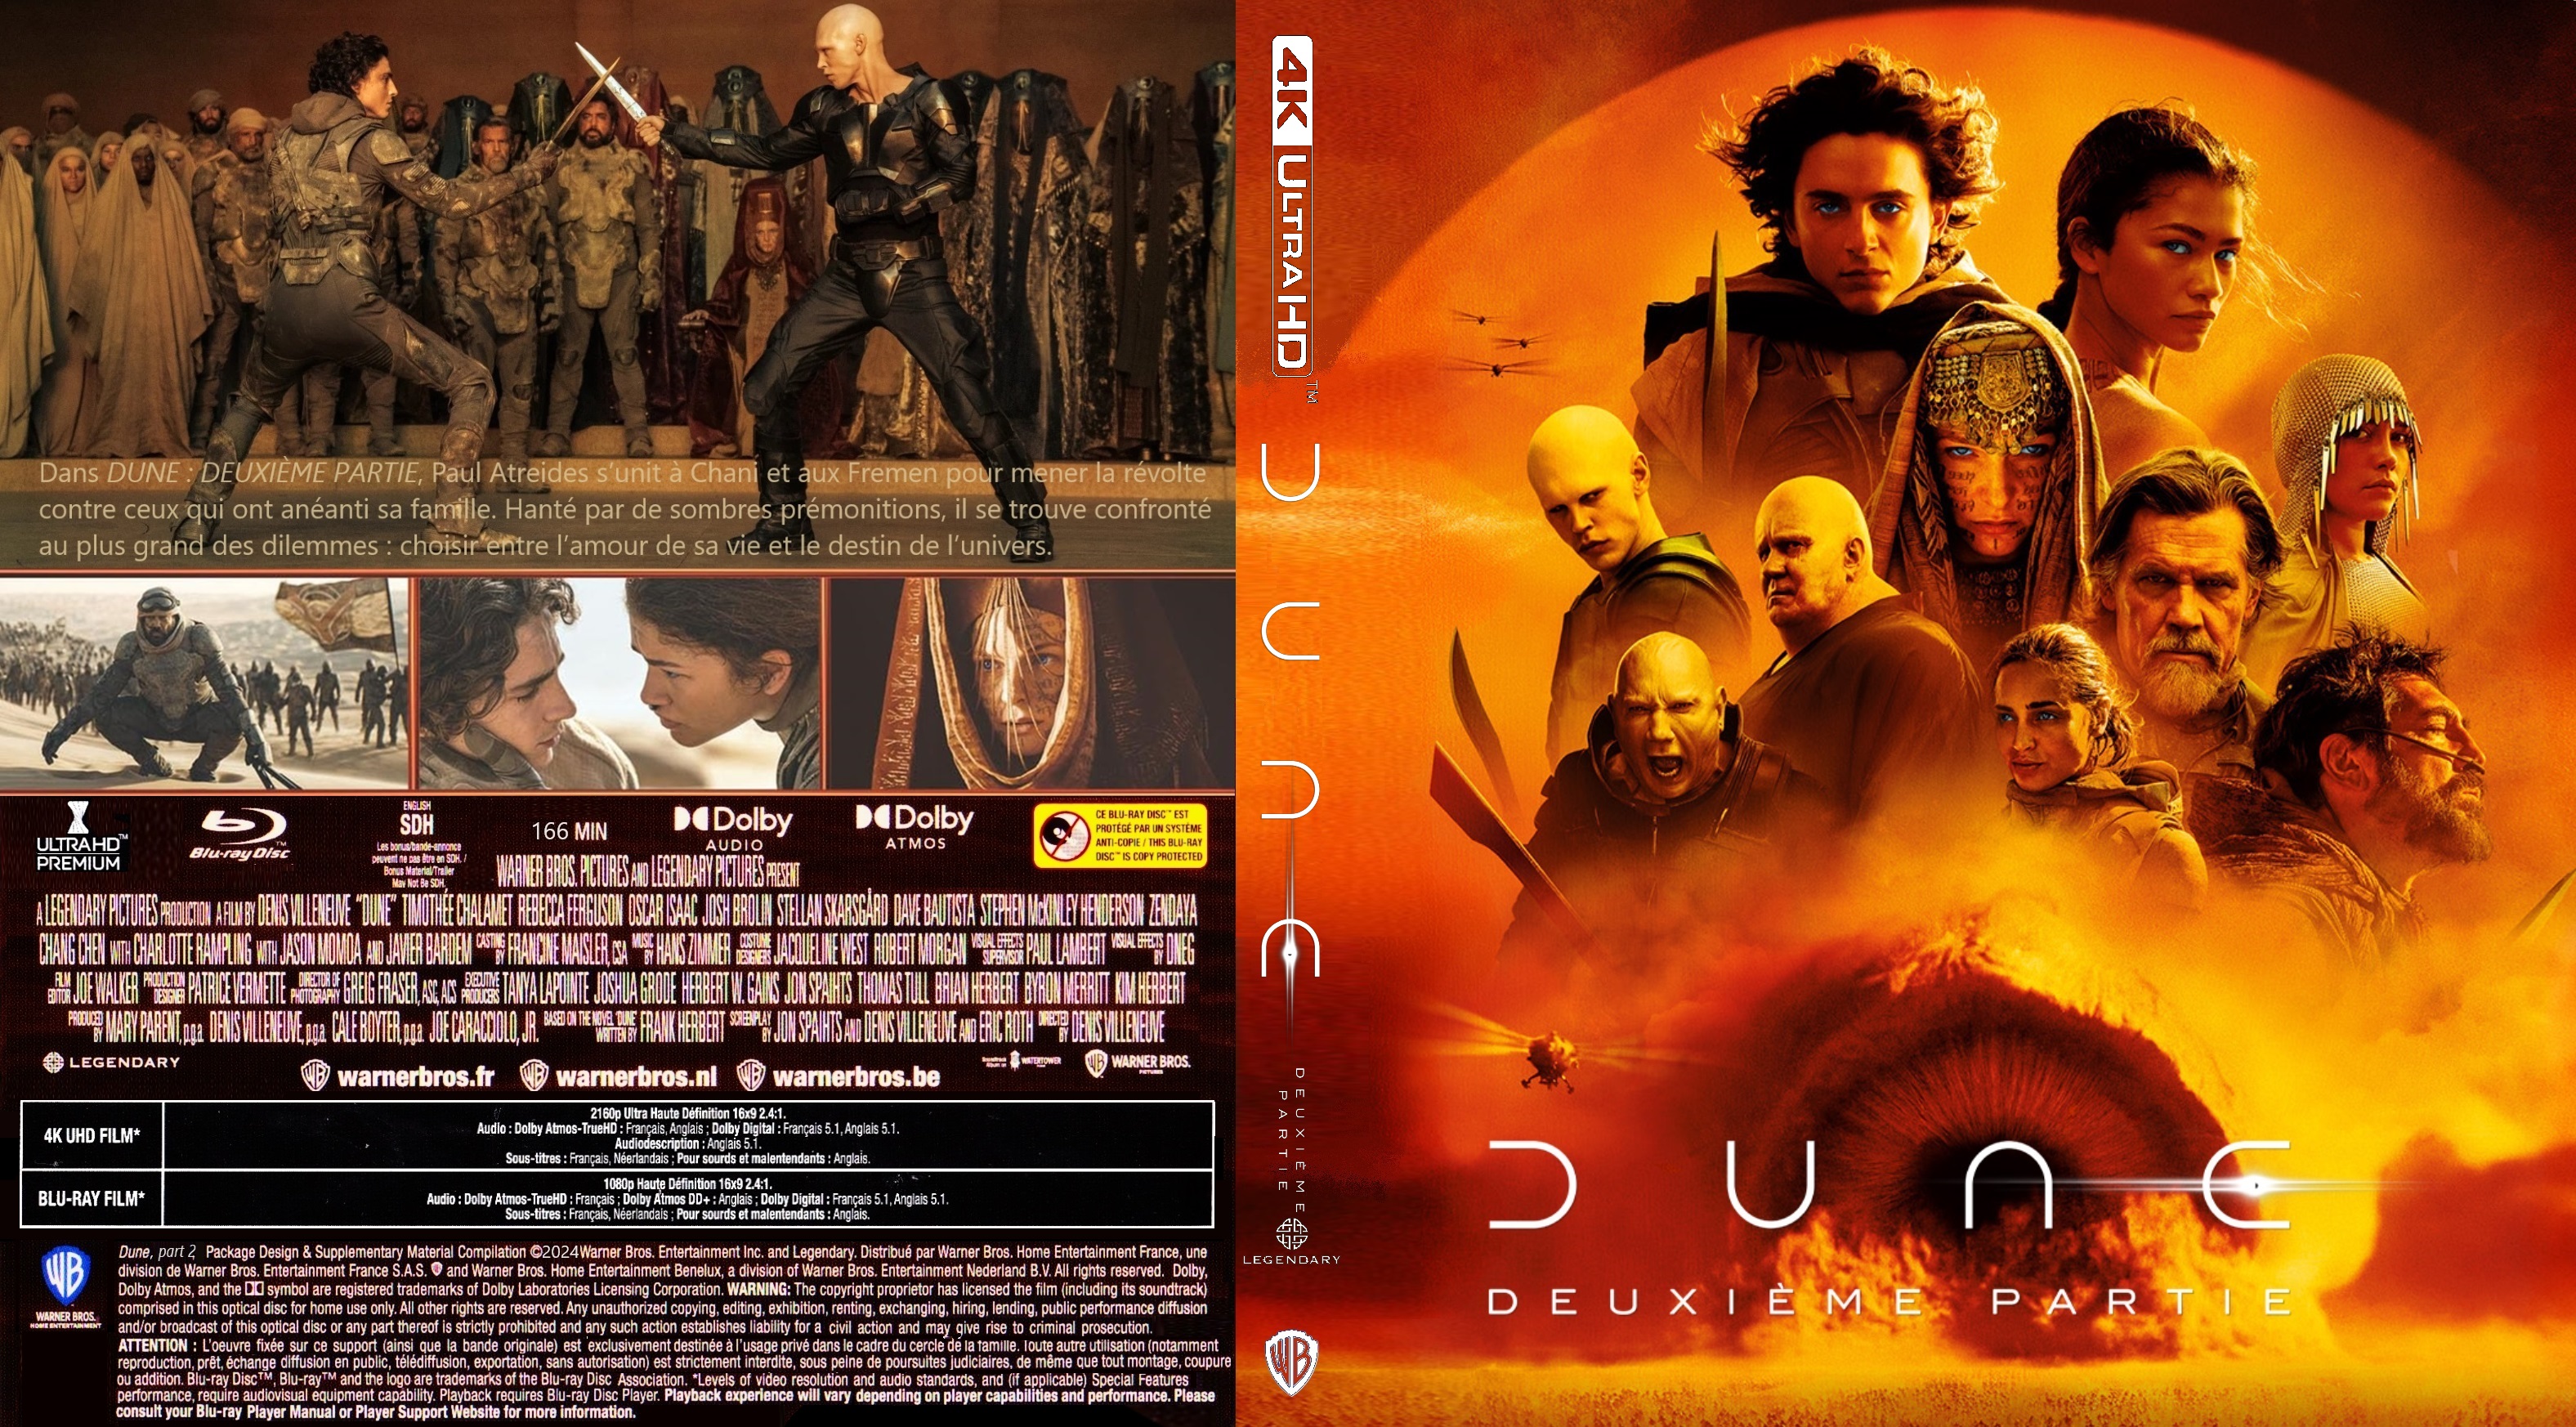 Jaquette DVD Dune deuxime partie 4K custom (BLU-RAY)